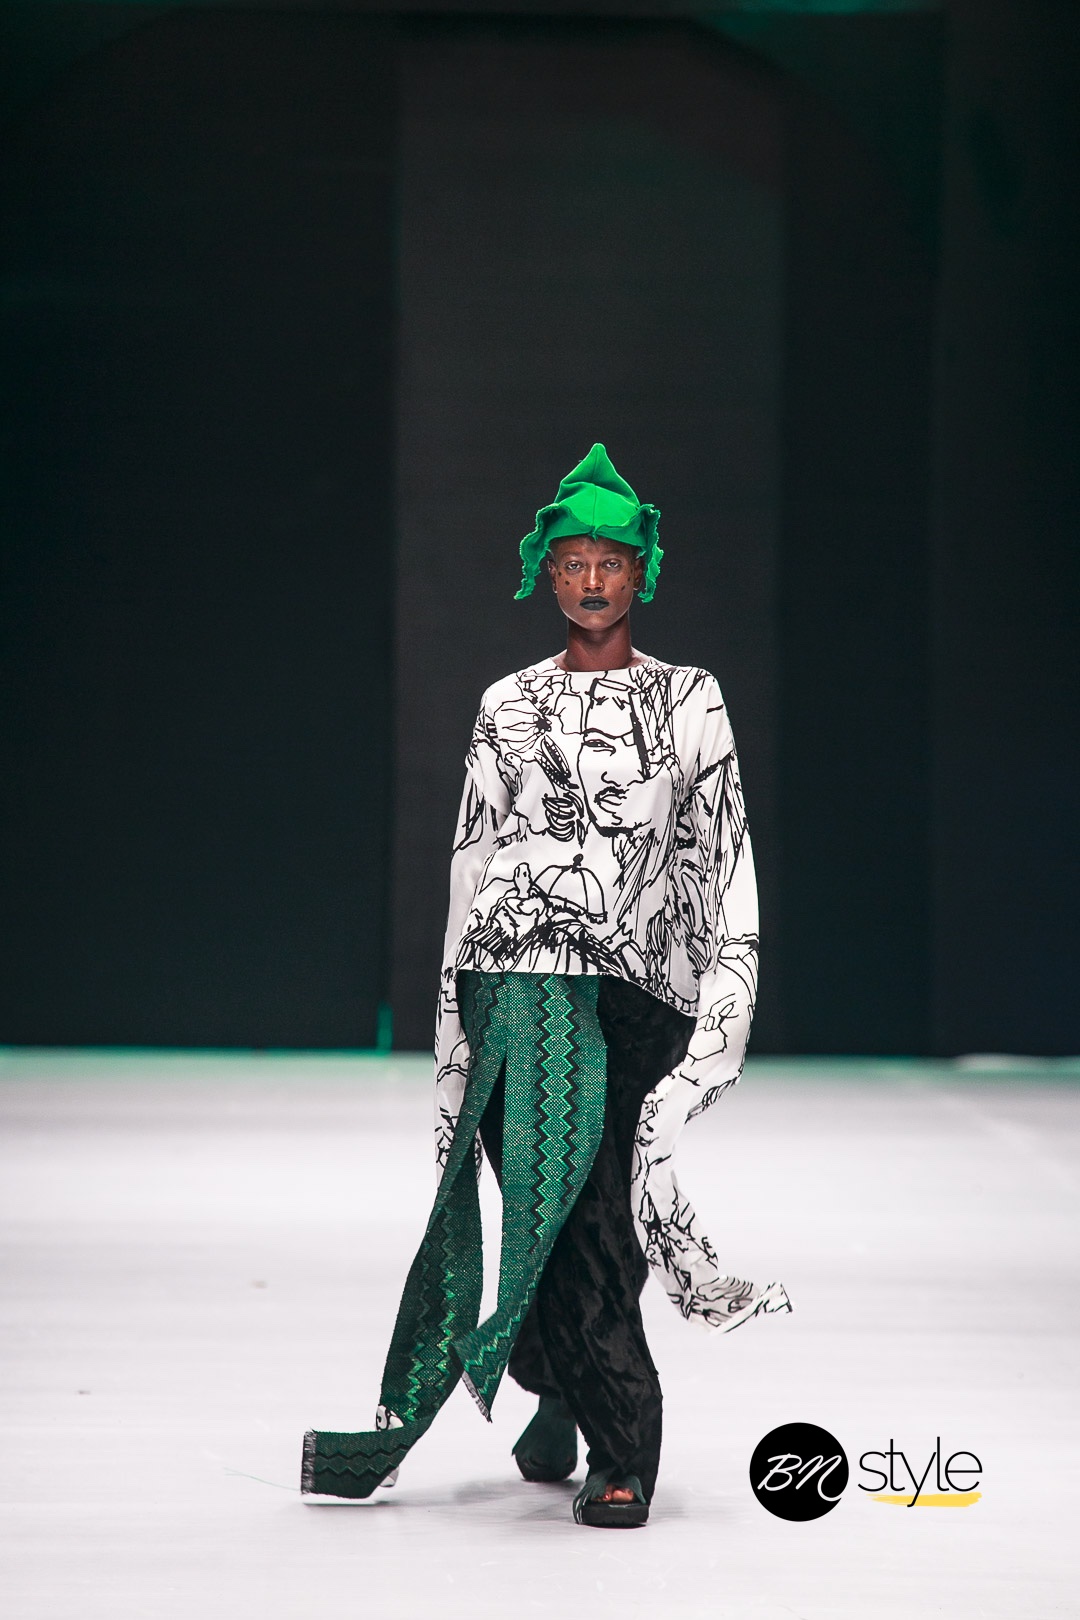 Lagos Fashion Week 2019 | Idma Nof | BN Style